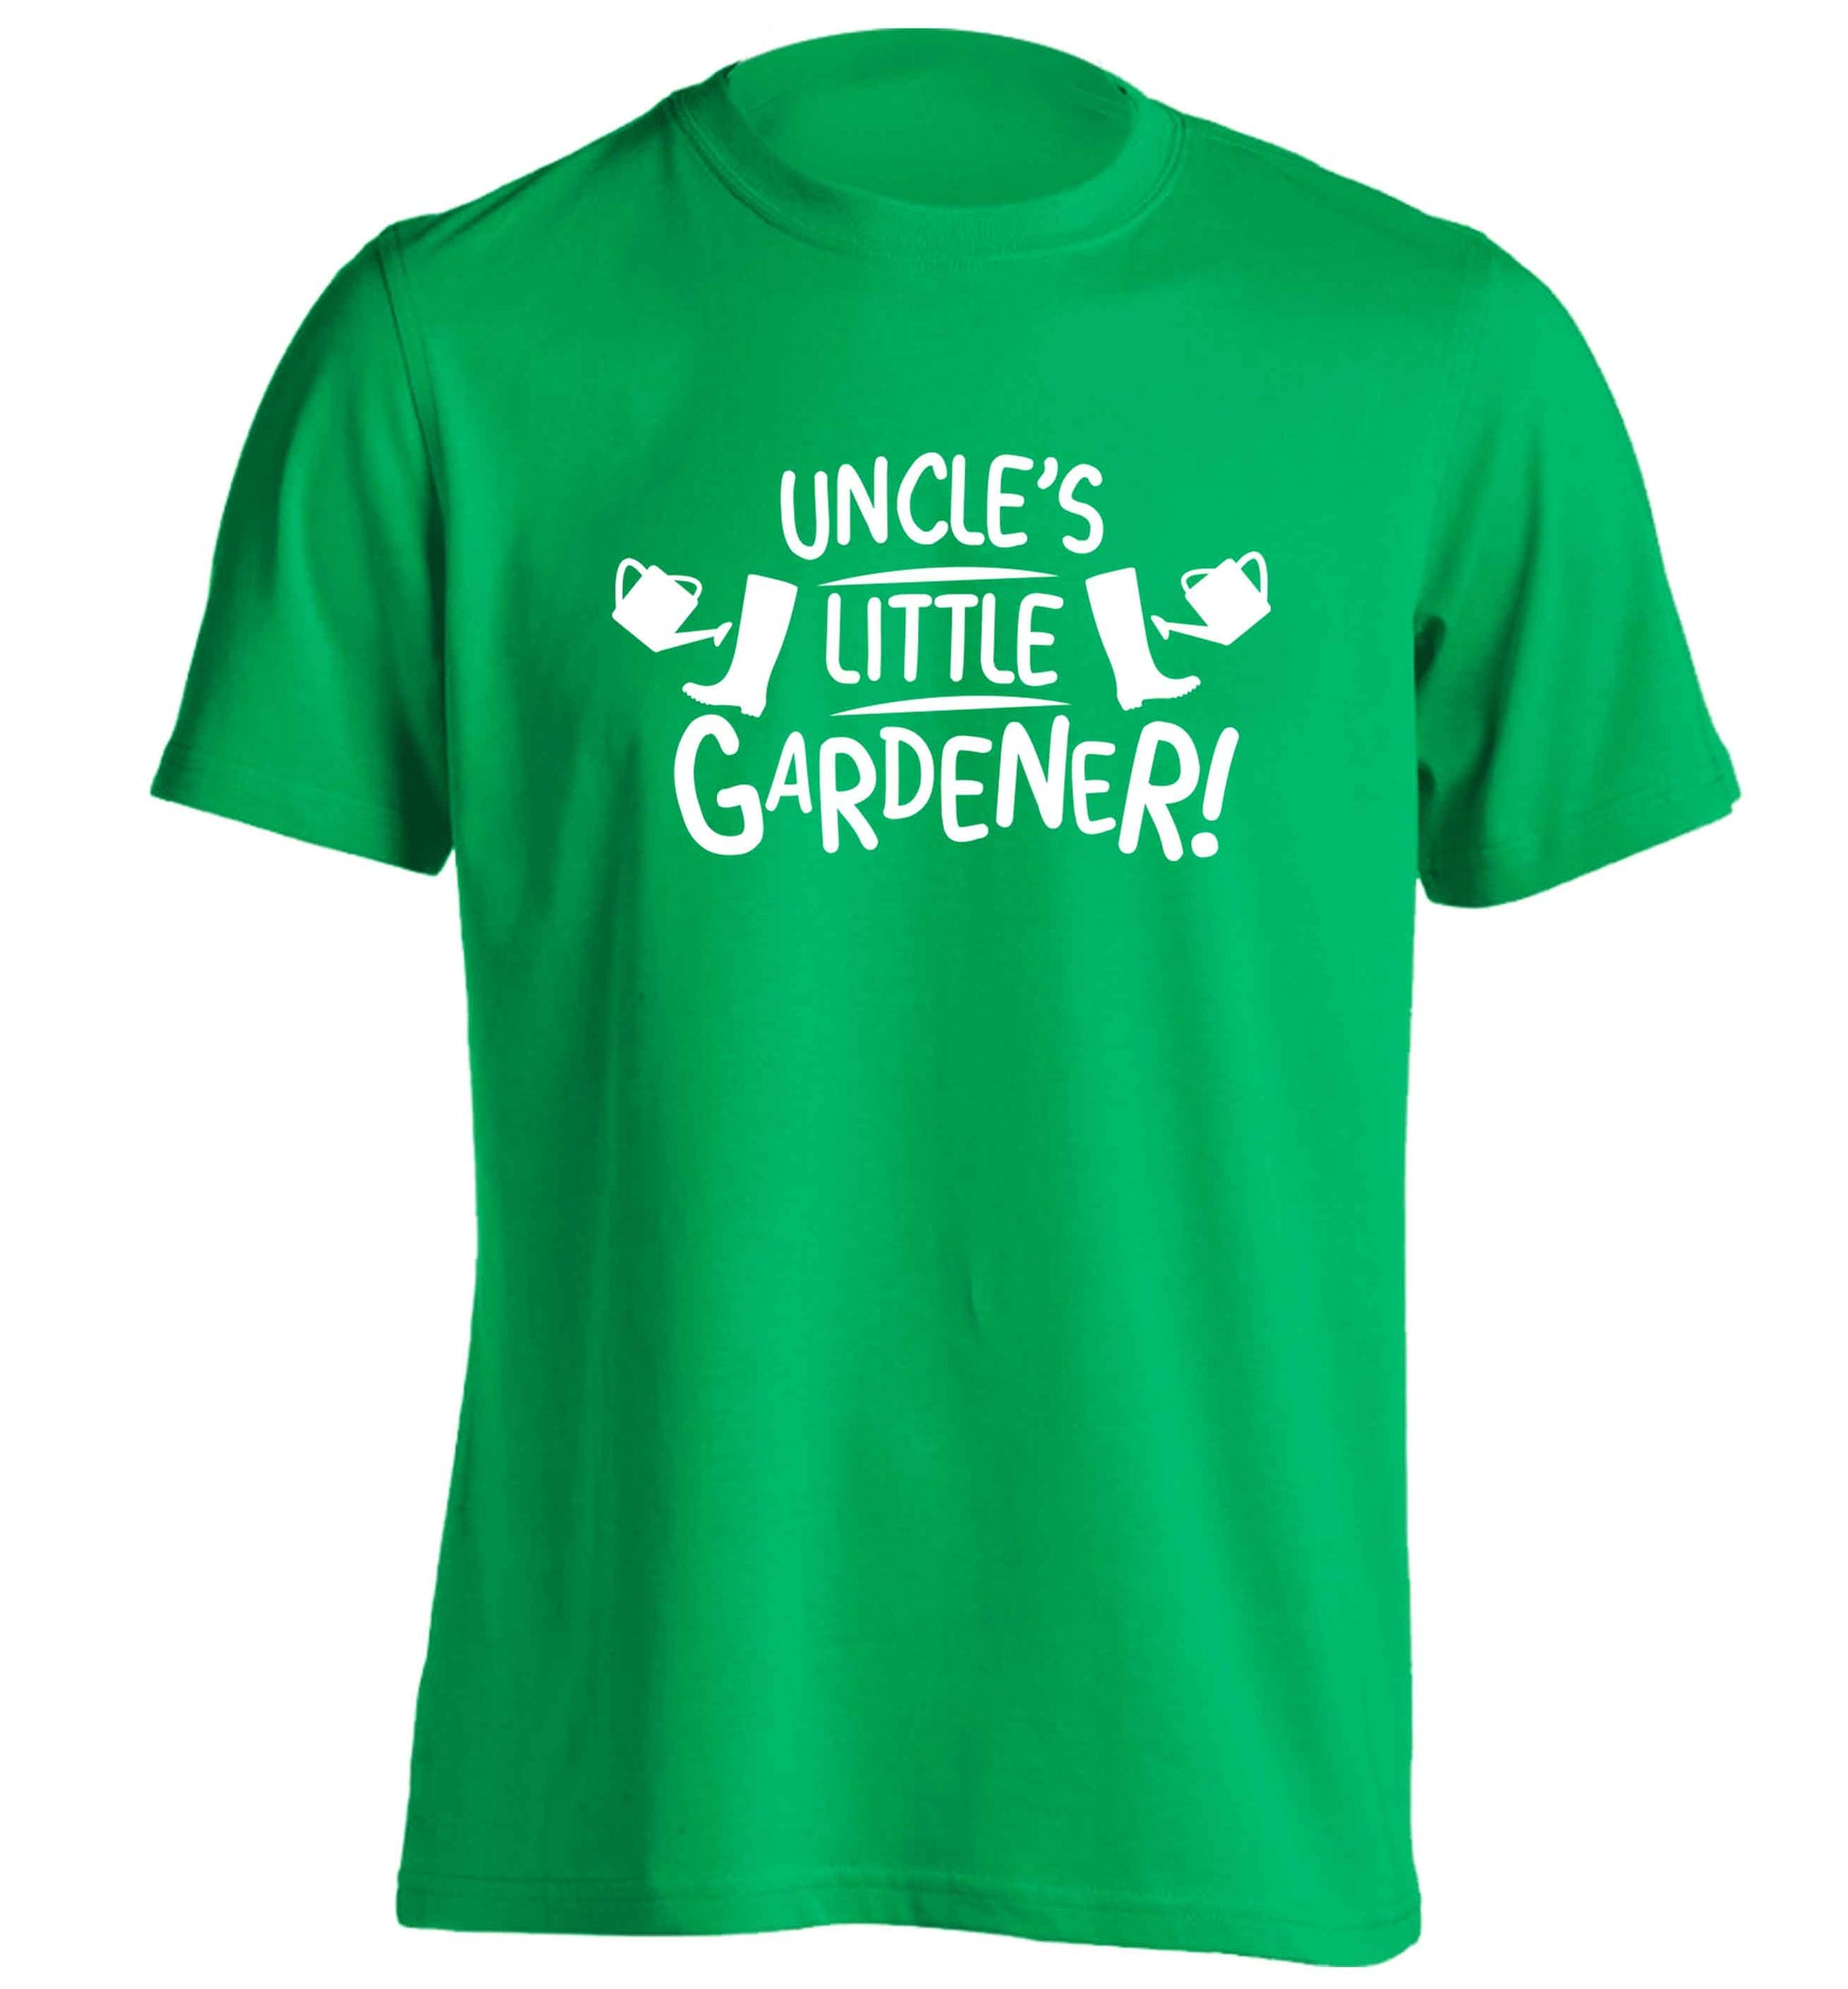 Uncle's little gardener adults unisex green Tshirt 2XL